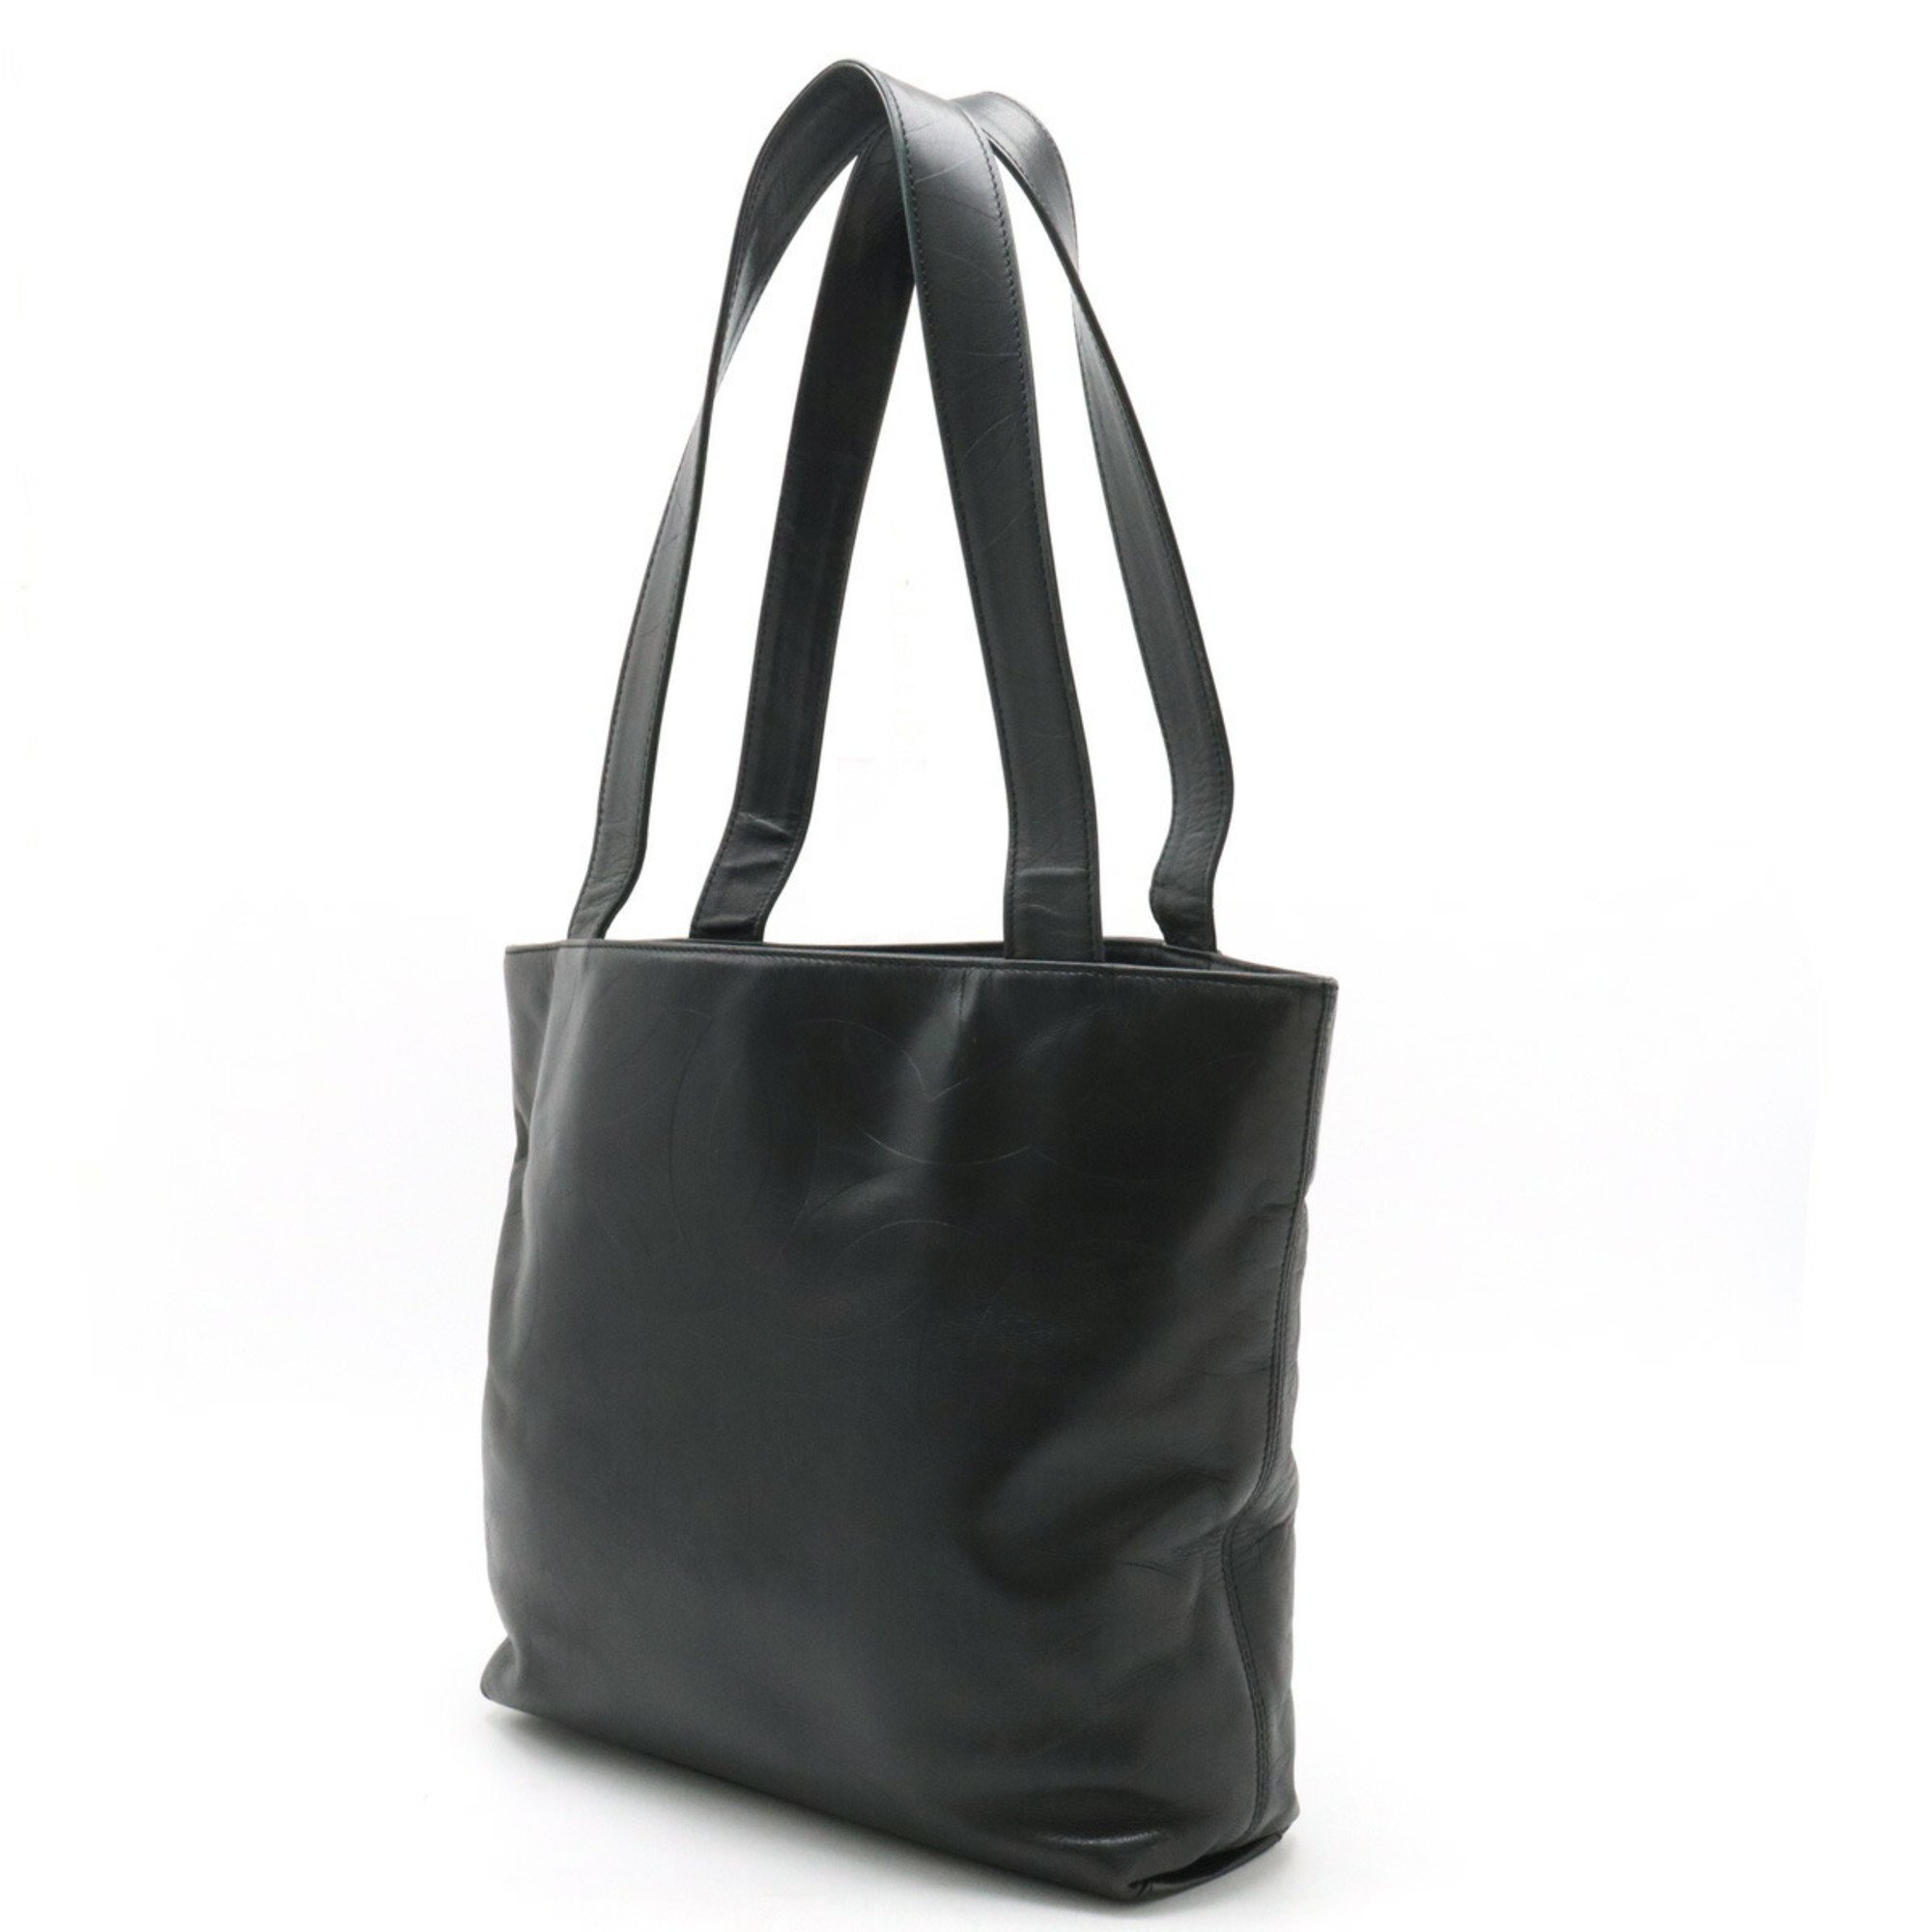 CHANEL Coco Mark embossed tote bag shoulder leather black